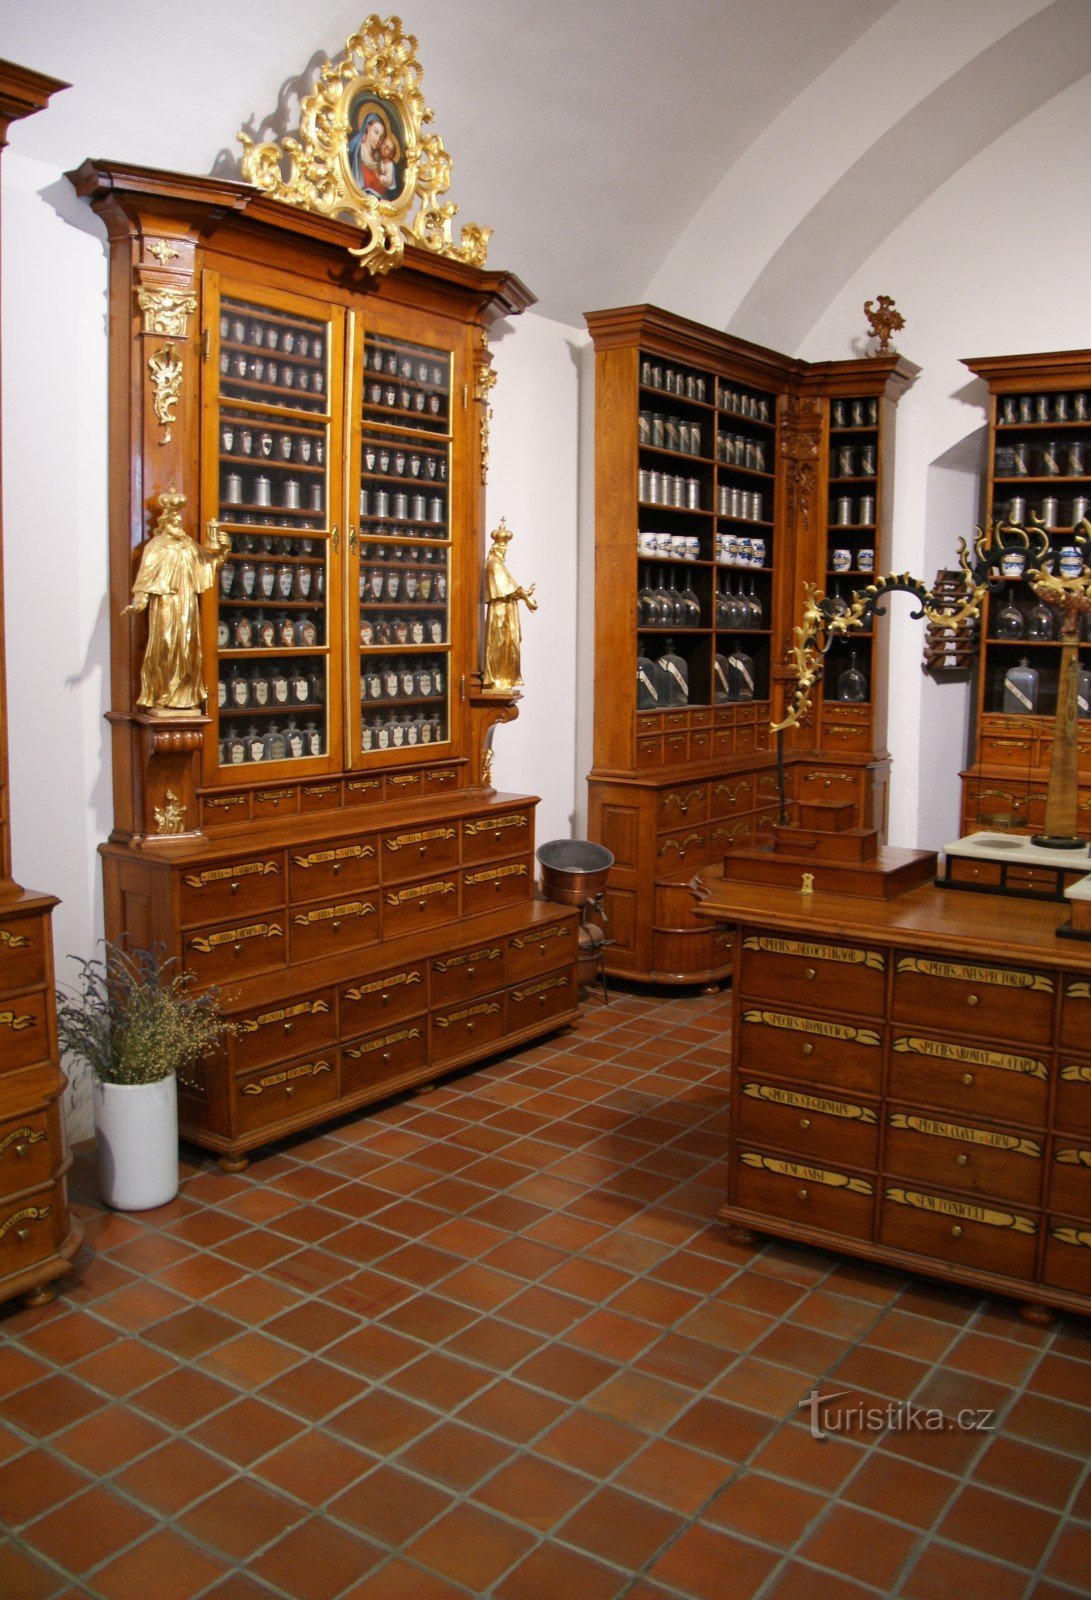 Brno (Špilberk) – baroque pharmacy